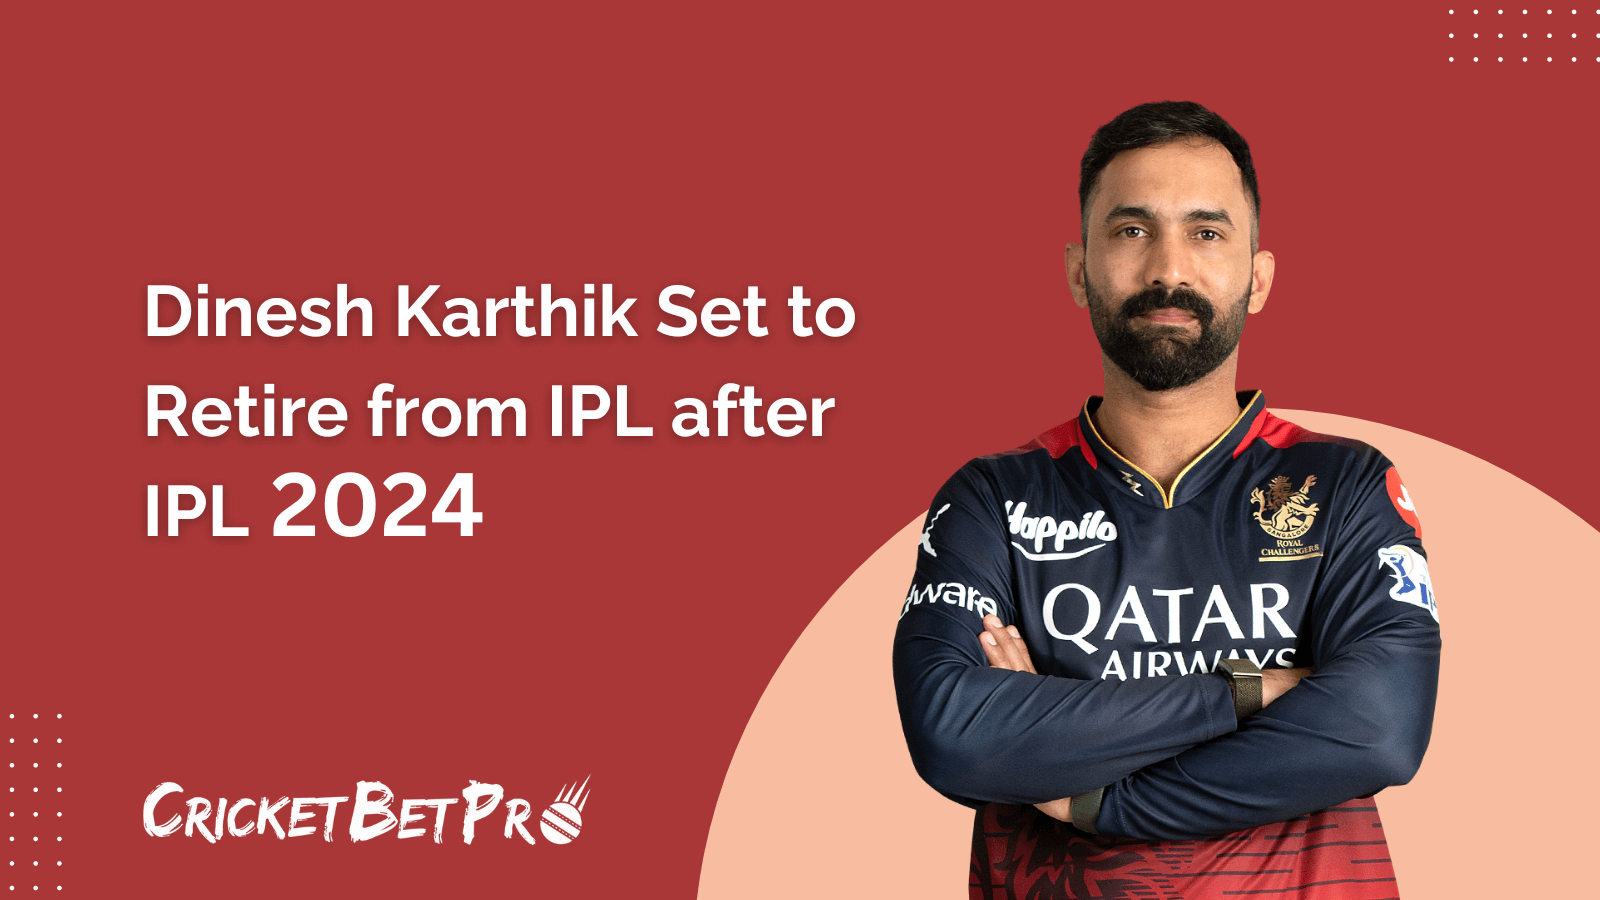 Dinesh-Karthik-Set-to-Retire-from-IPL-after-IPL-2024